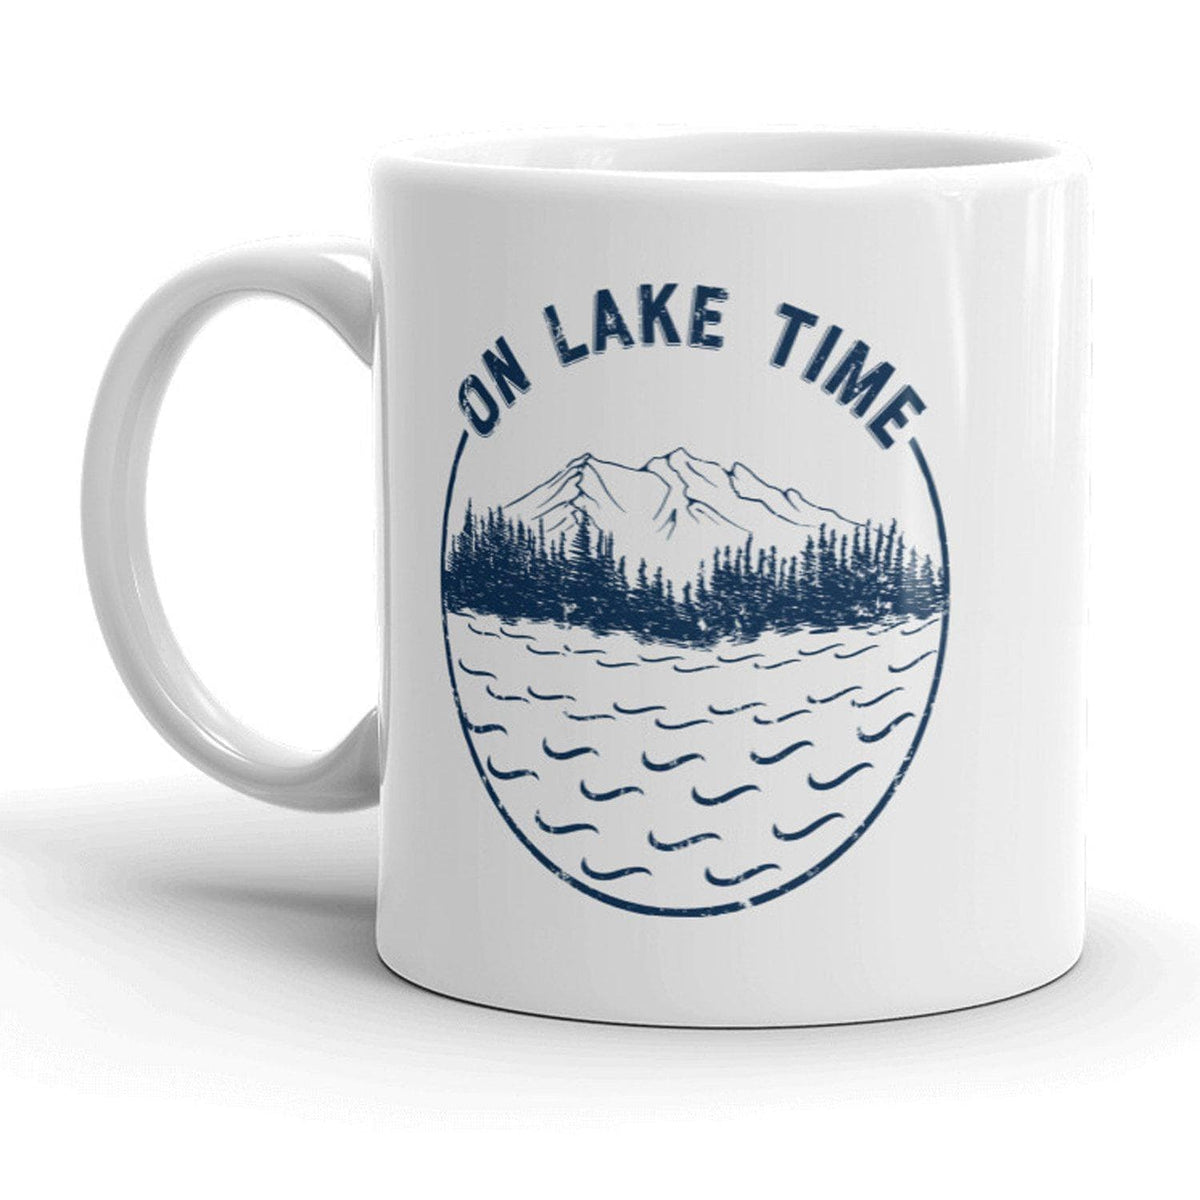 On Lake Time Mug - Crazy Dog T-Shirts